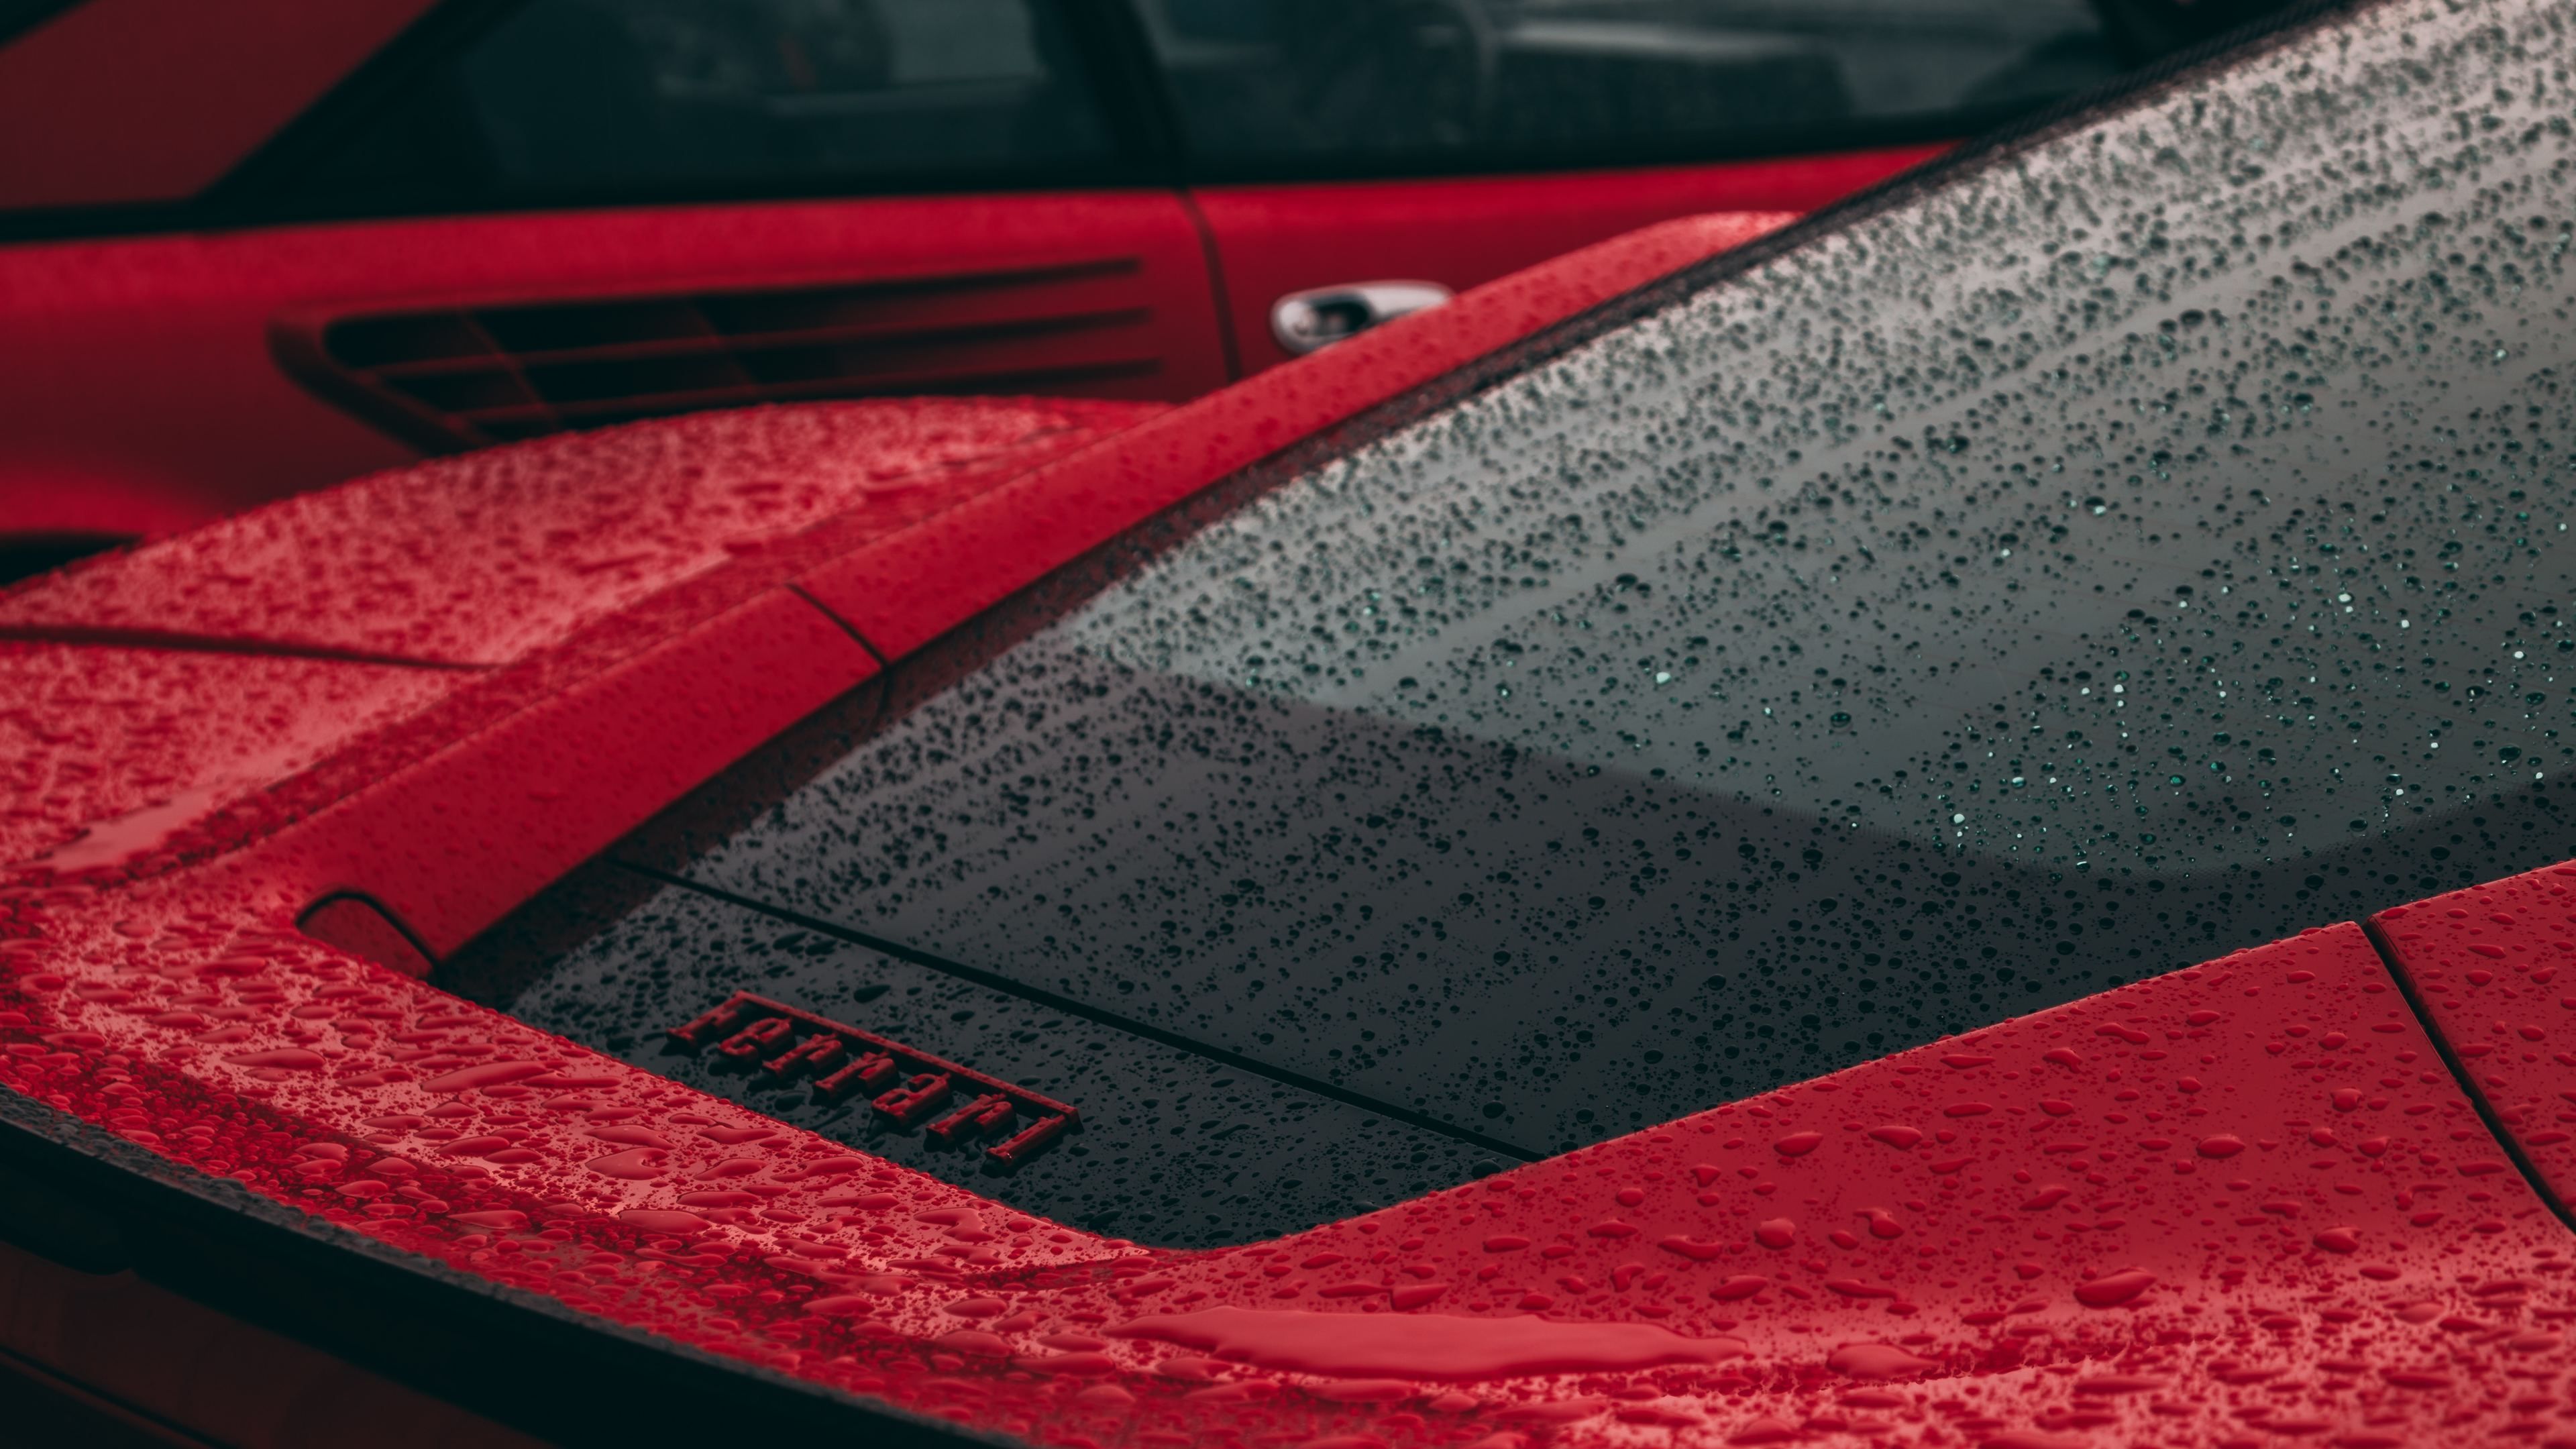 Rain Drops On Ferrari 4k Wallpaper Rain Wallpaper, Hd Wallpaper, Ferrari Wallpaper, Drops Wallpaper, Cars Wallpaper, 5k W. Car Insurance, Car, Car Wallpaper